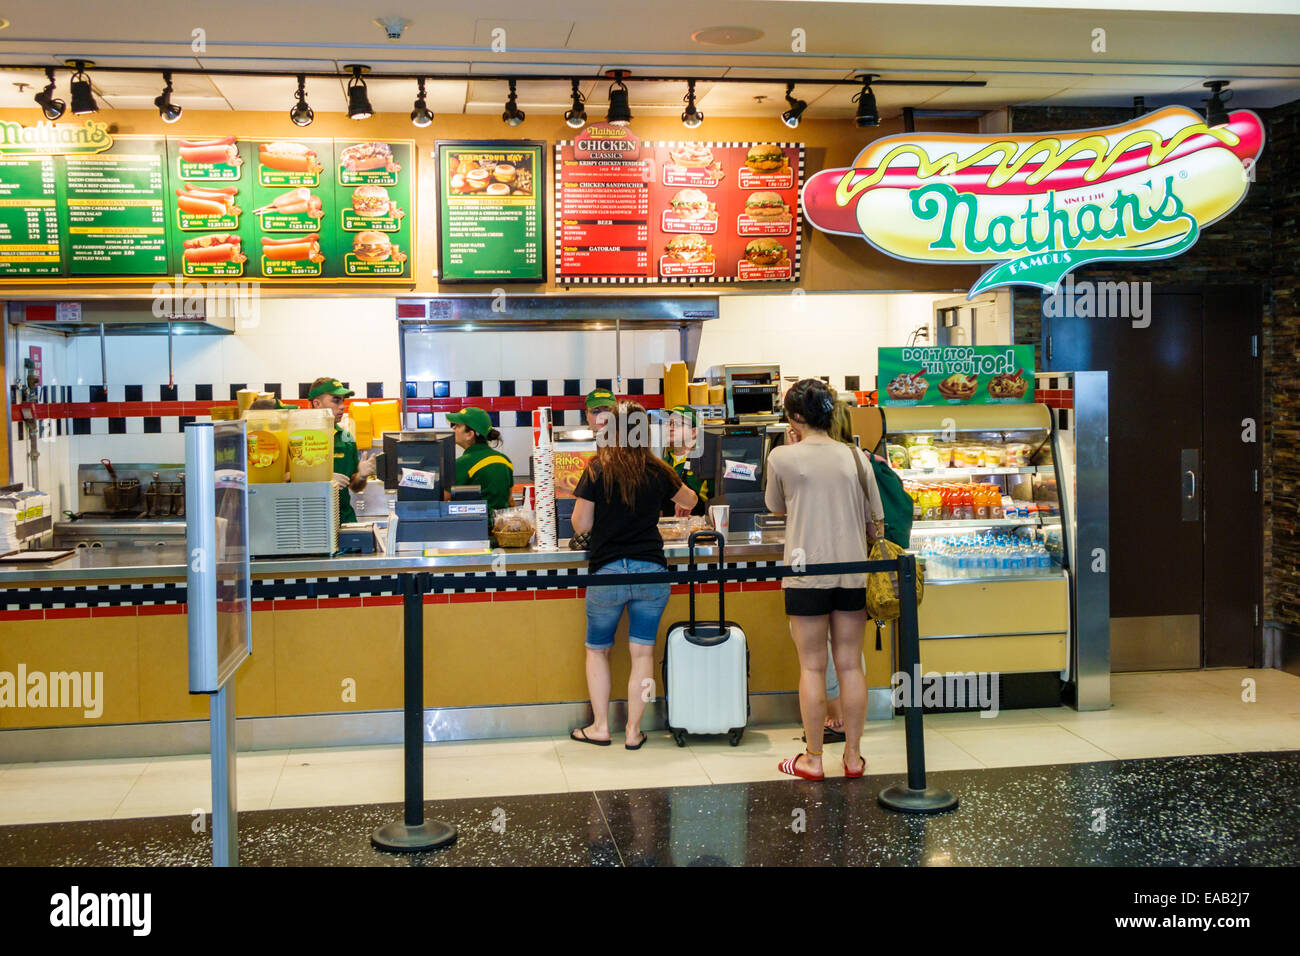 Miami Florida International Airport MIA, Terminal, Gate, Nathan's Famous, Fast Food, Hot Dogs, Schalter, Kunden, Bestellung, Besucher reisen Reise tou Stockfoto